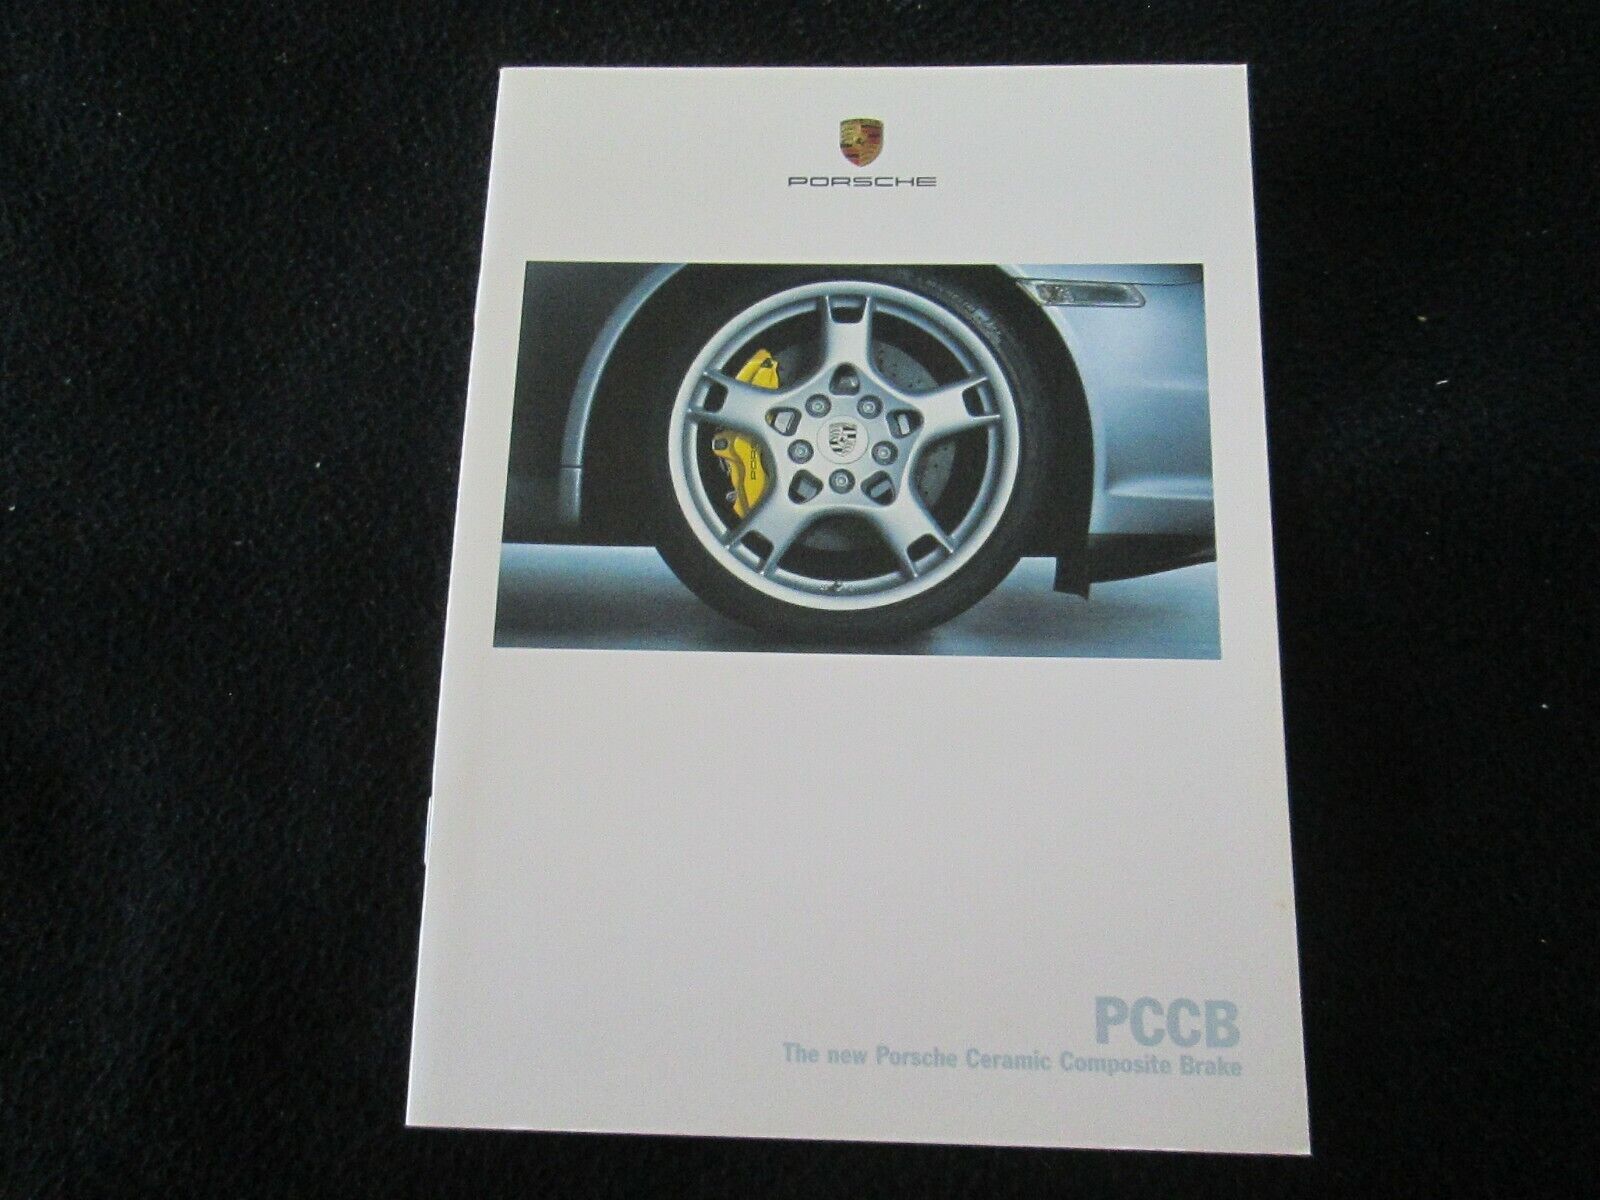 2005 Porsche PCCB Ceramic Brakes Catalog 911 997 Carrera 996 GT2 Turbo Brochure